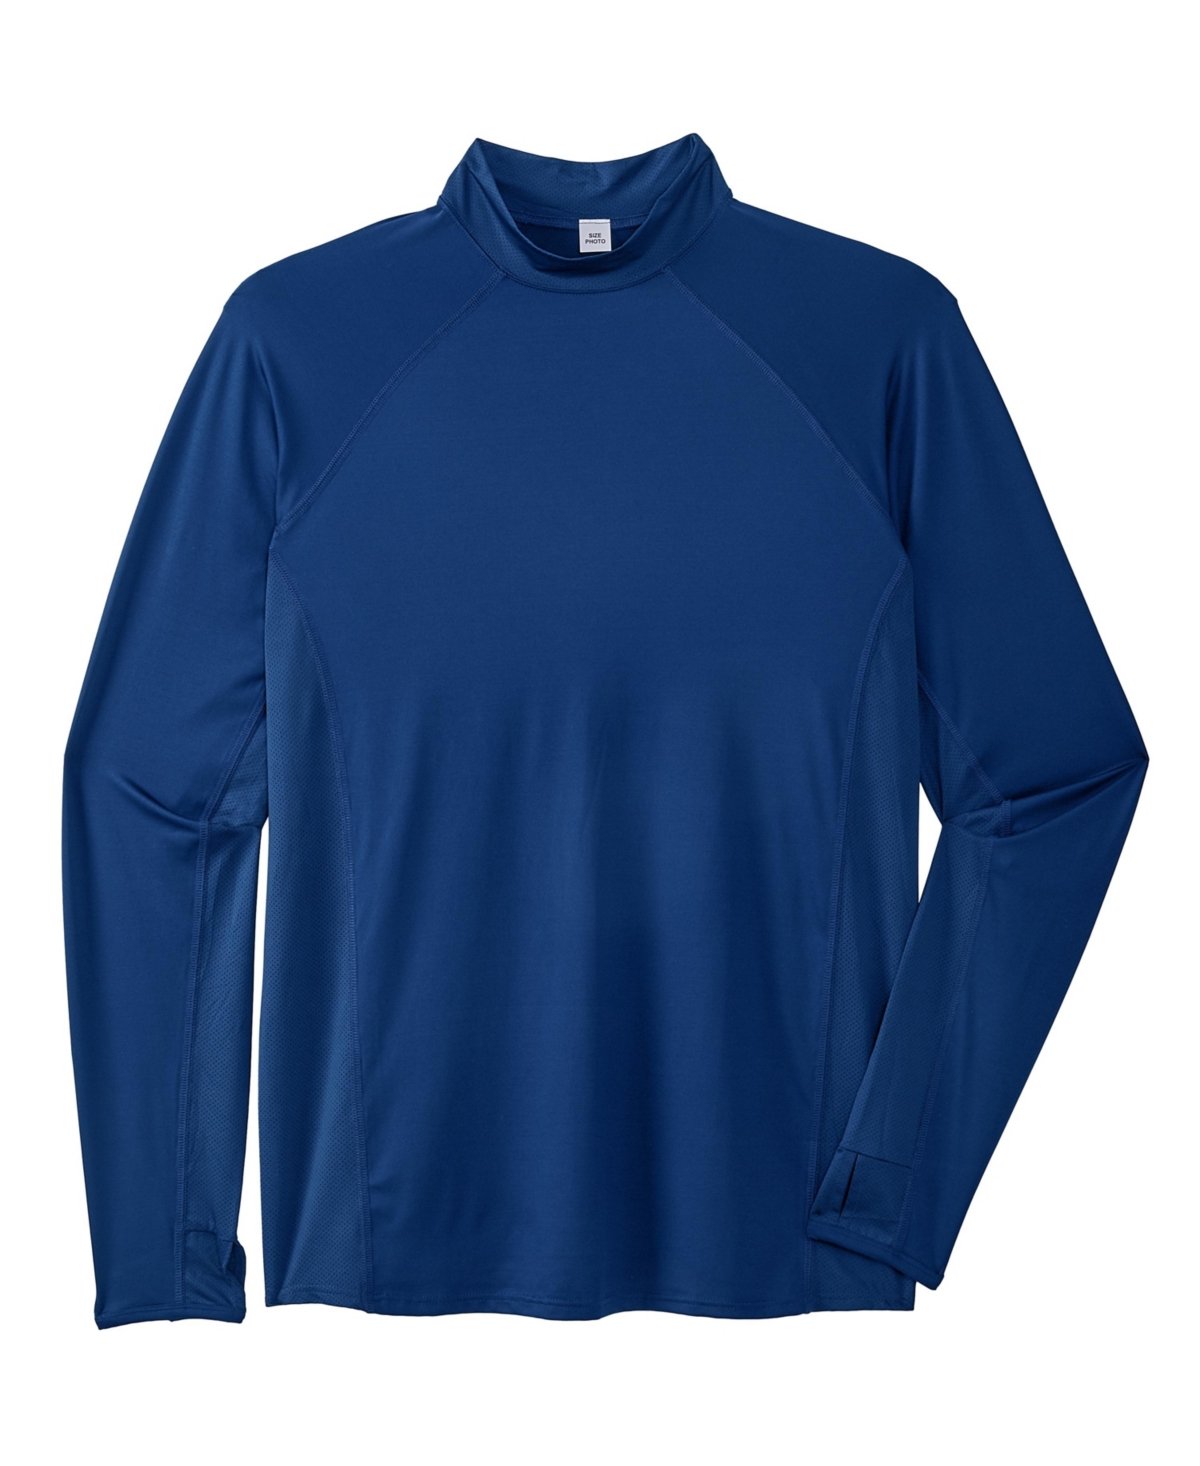 Big & Tall Mock Neck Base Layer ShirtKs Sport - Midnight navy